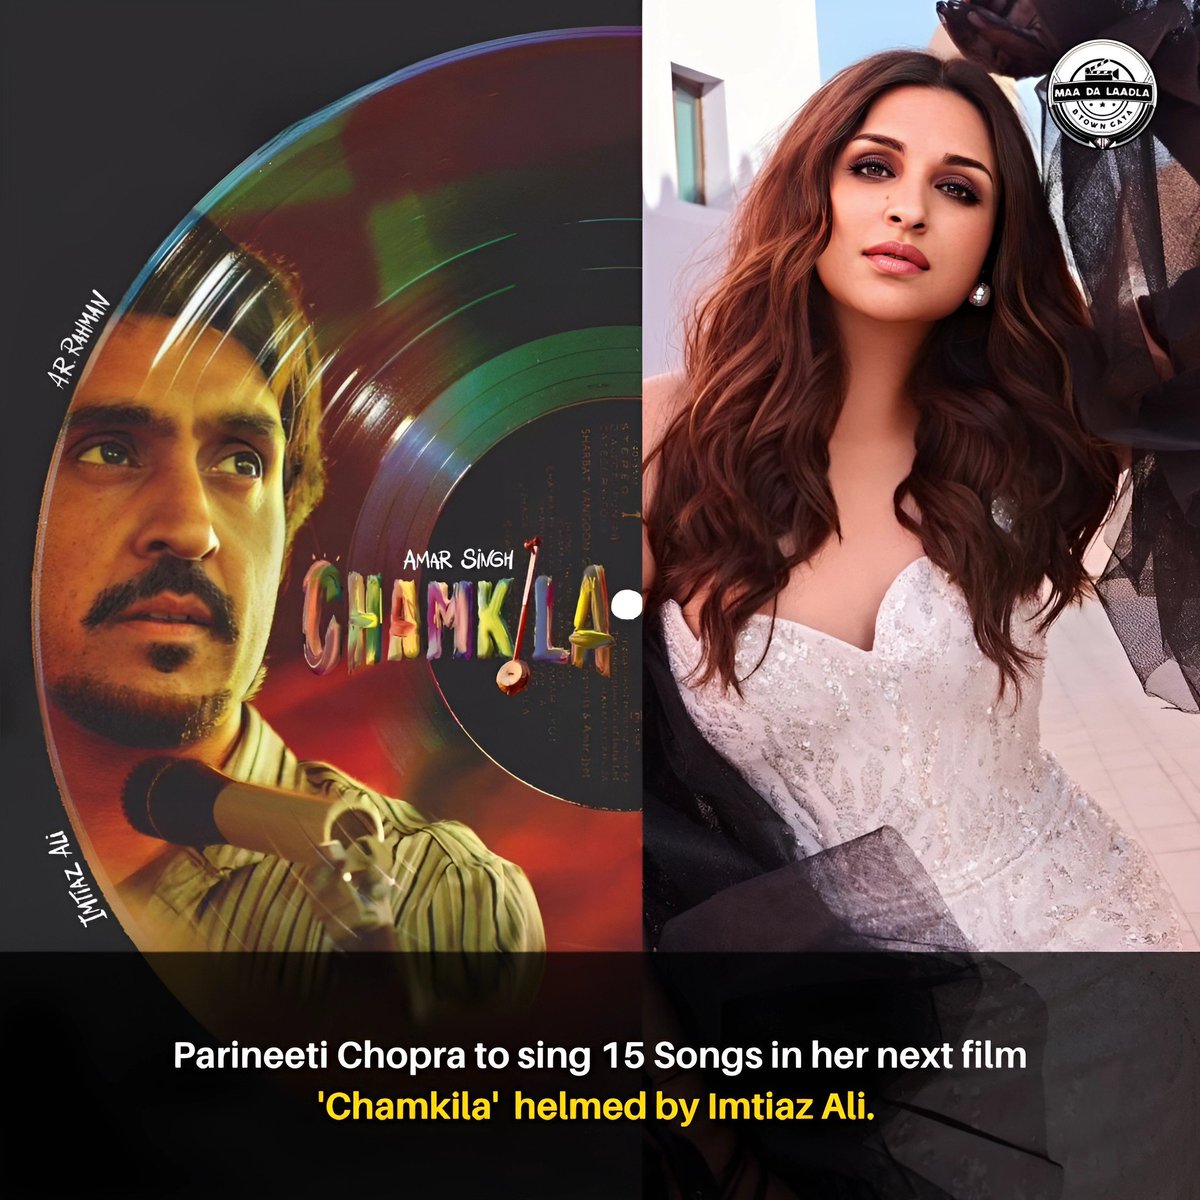 #ParineetiChopra to sing 15 Songs in her next film #Chamkila helmed by #ImtiazAli. 💿🎻

#AmarSinghChamkila #BollywoodFilm #DiljitDosanjh